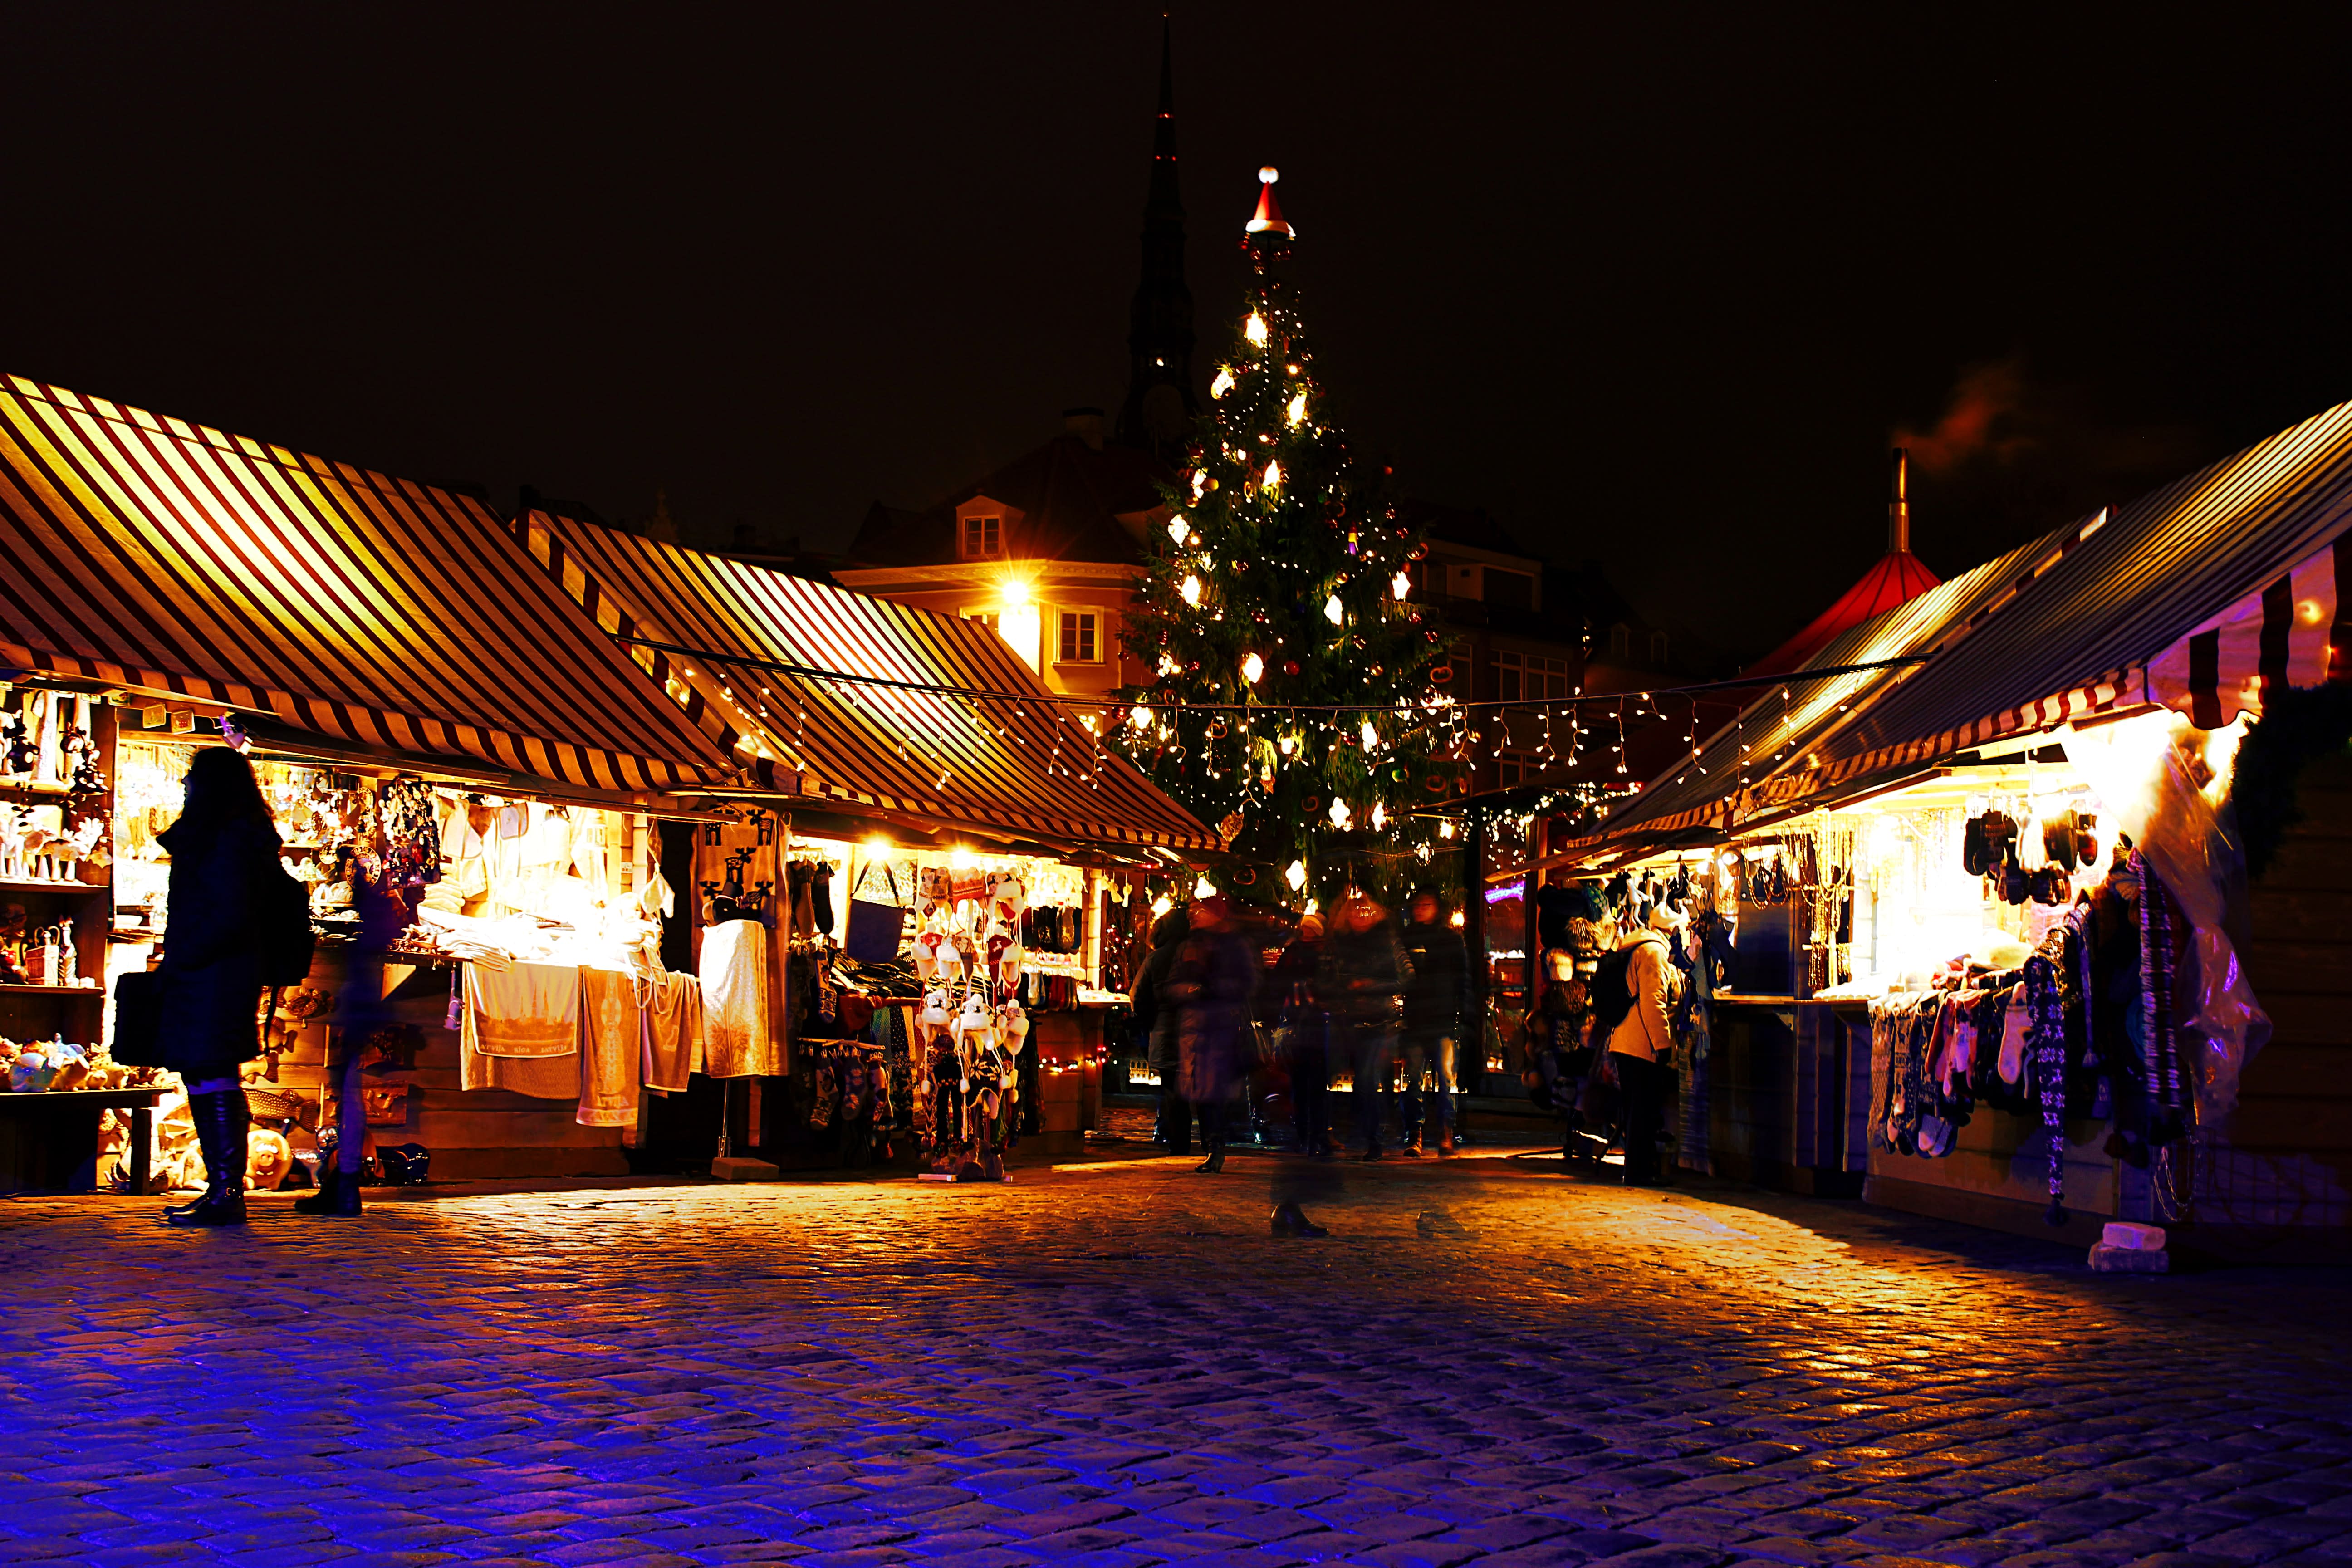 Image of Lighting, Urban, City, Person, Bazaar, Market, Shop, Handbag, Shoe, Christmas, Christmas Decorations, Festival, 